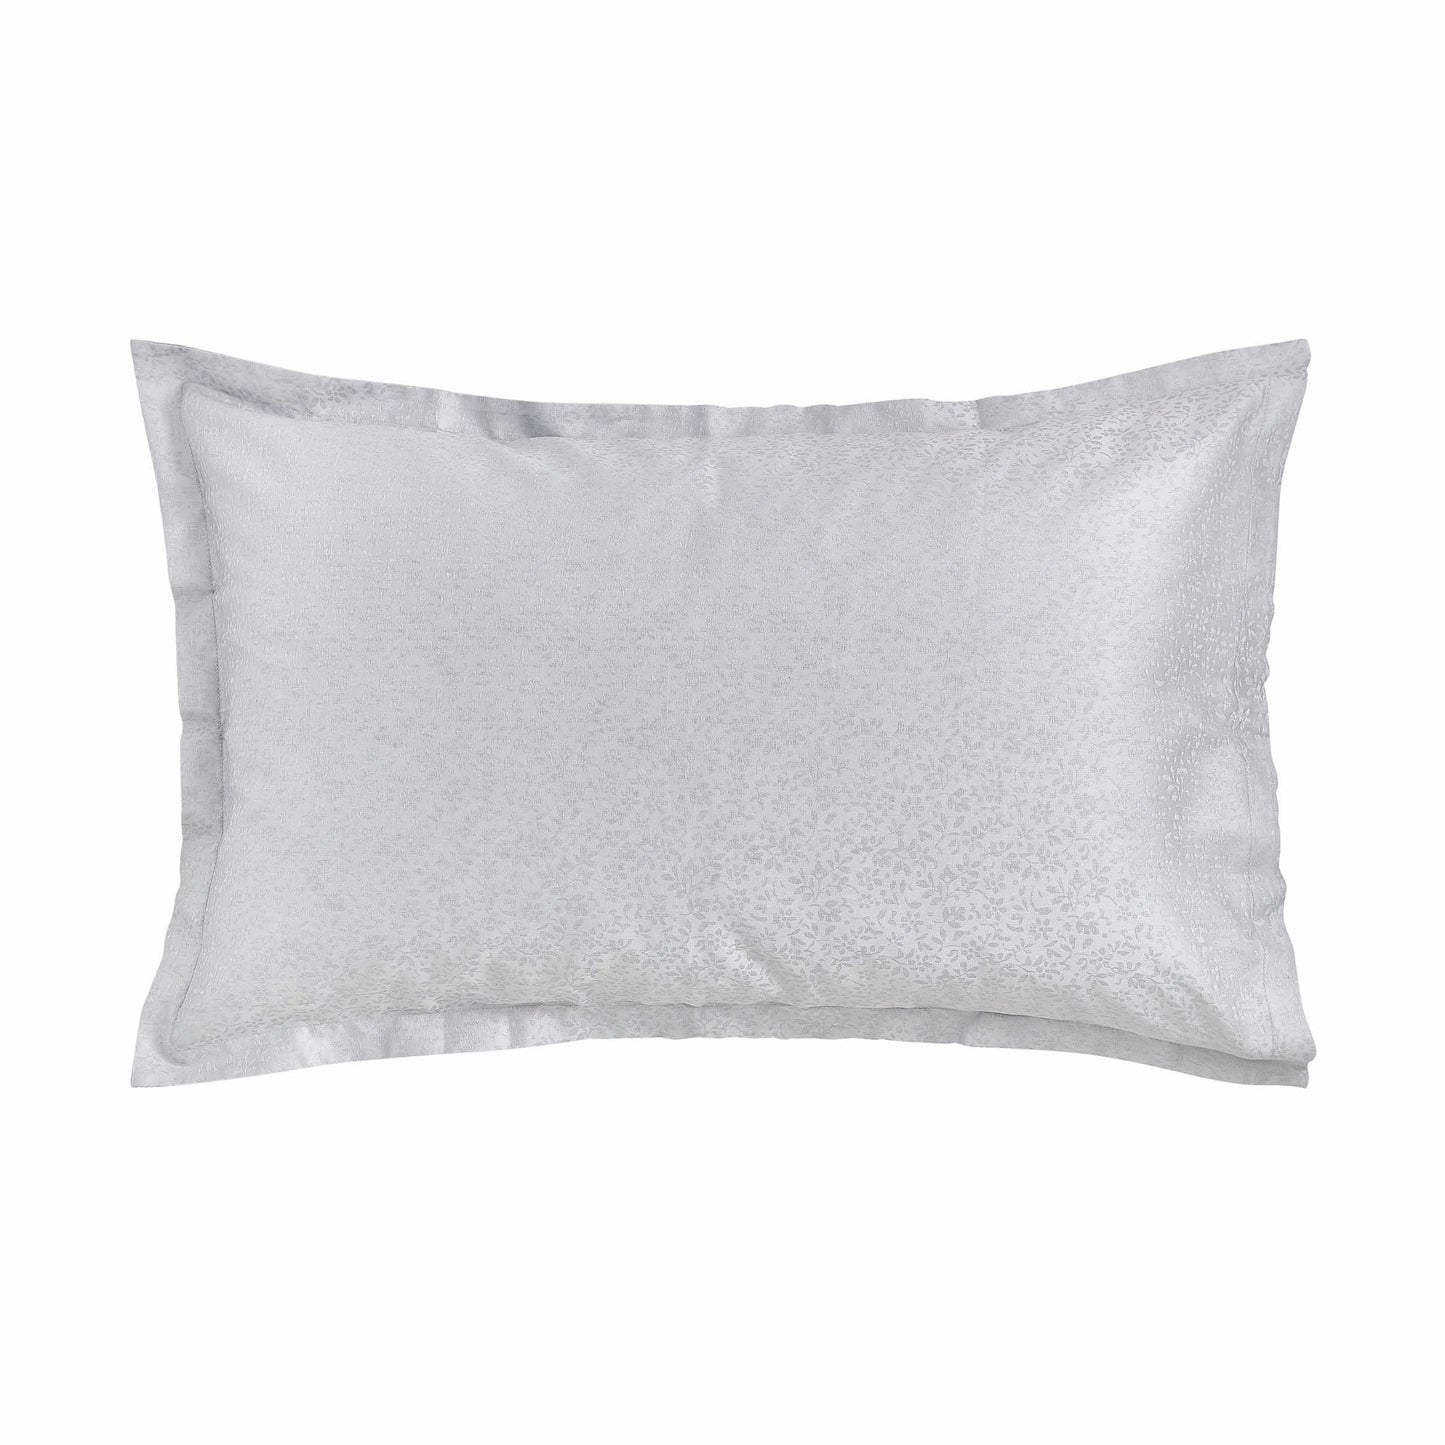 Grey Jacquard Patterned Murmur Oxford Pillowcase